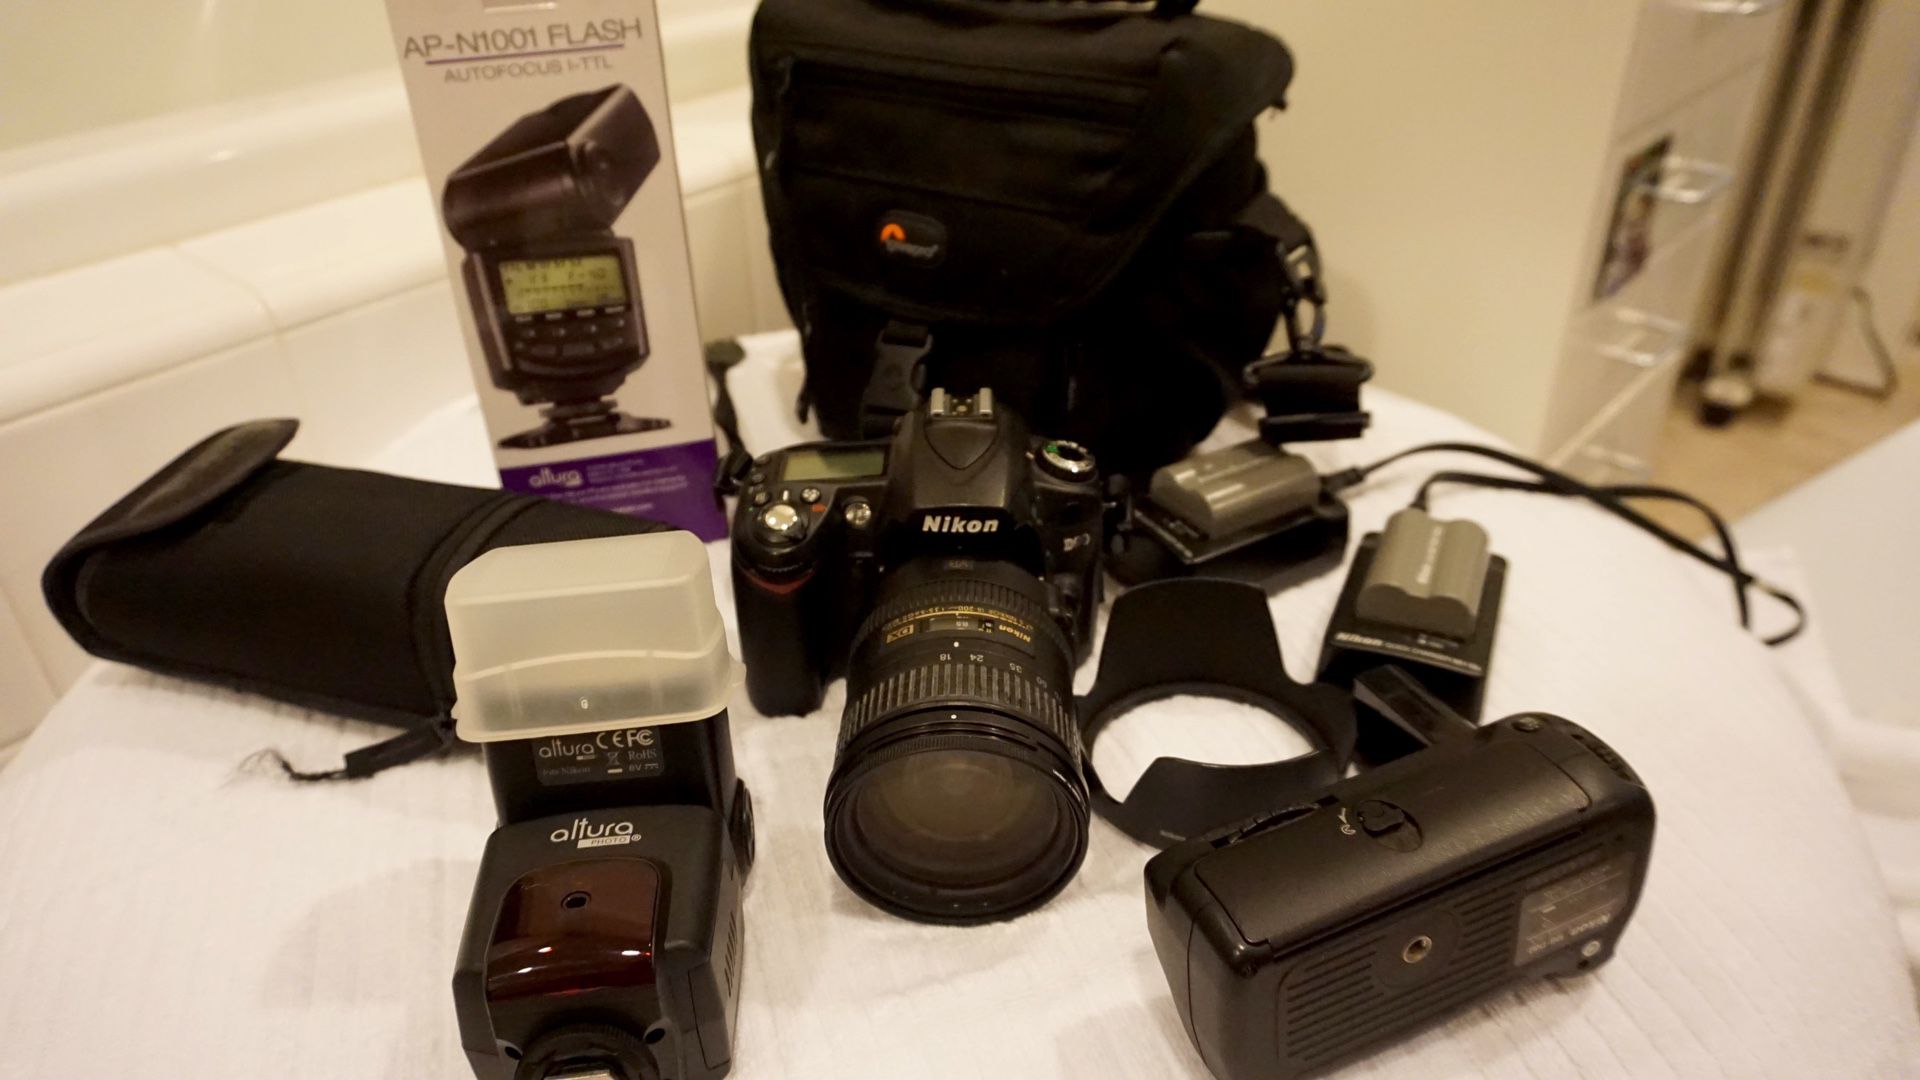 Nikon D90 Photography Bundle (Like New) $200 (OBO)